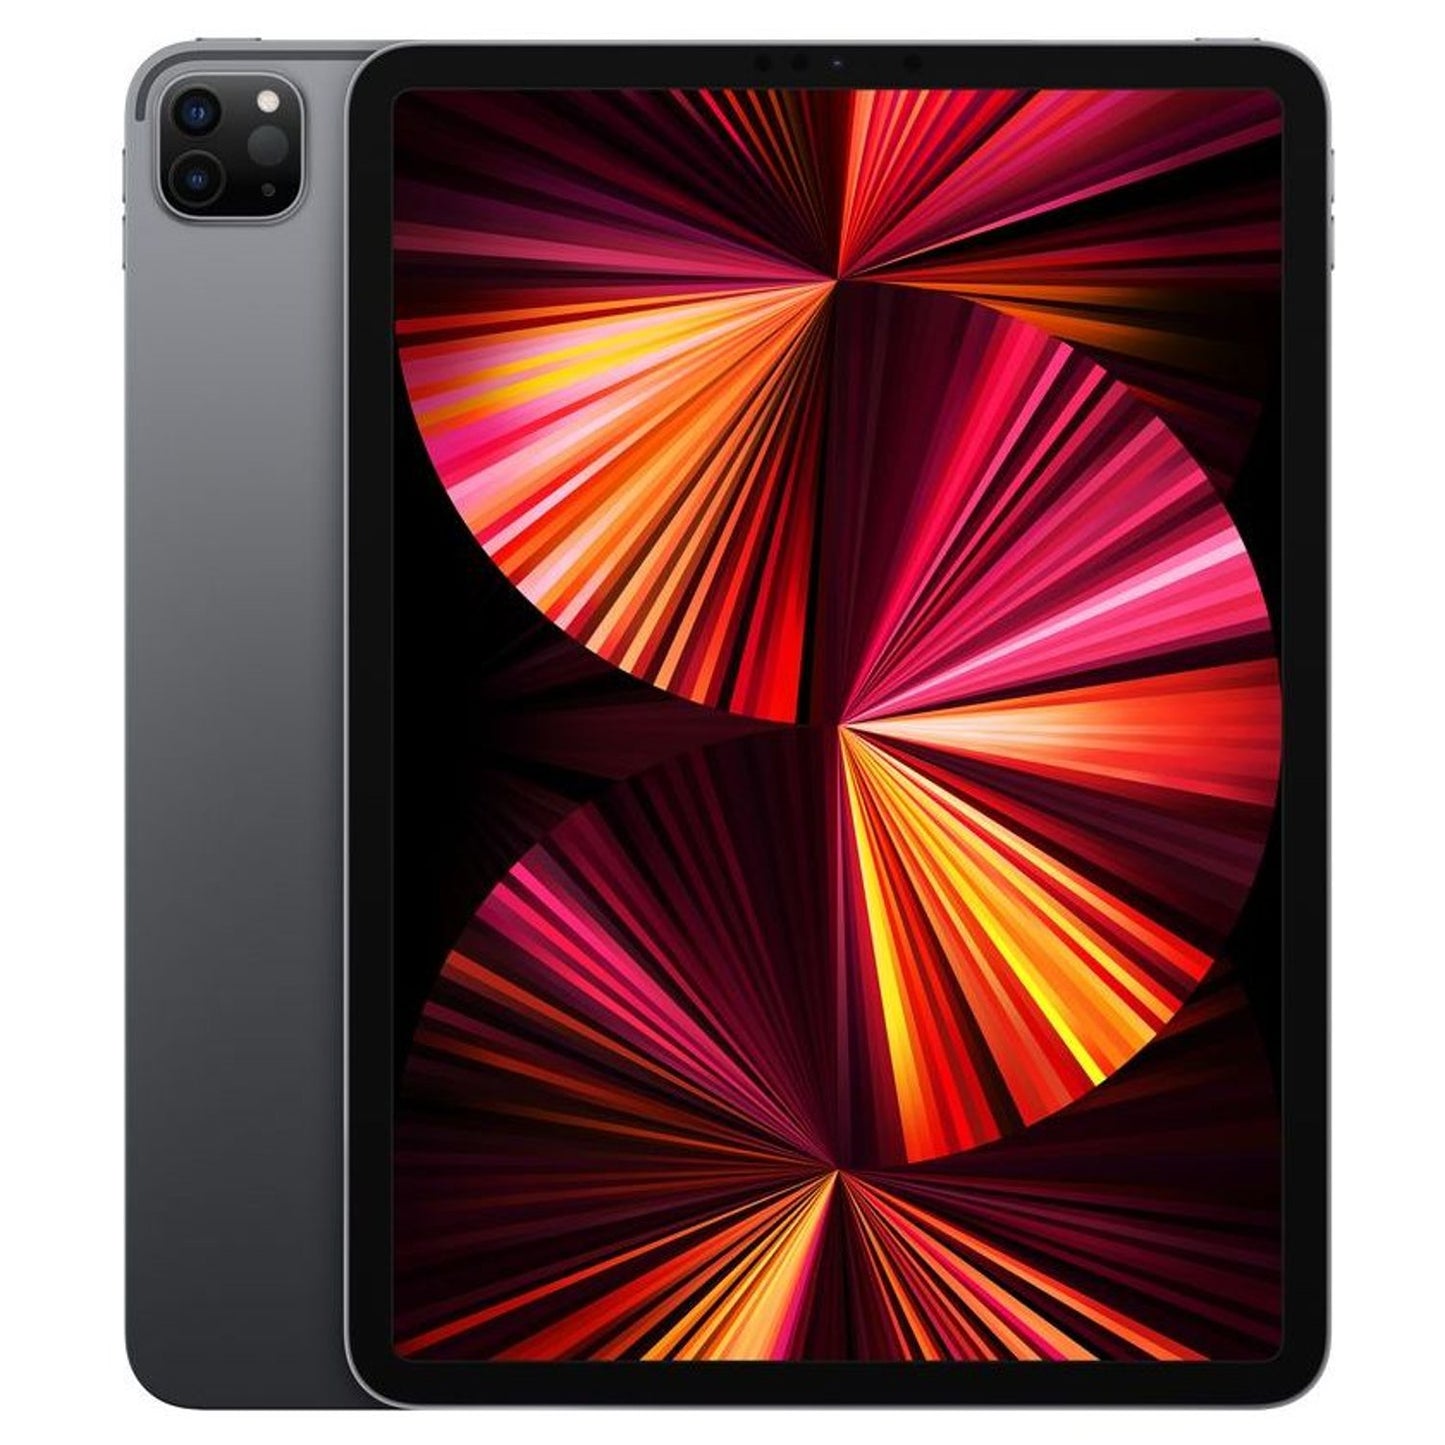 Apple iPad Pro 11-inch (3rd Generation) - M1 CHIP